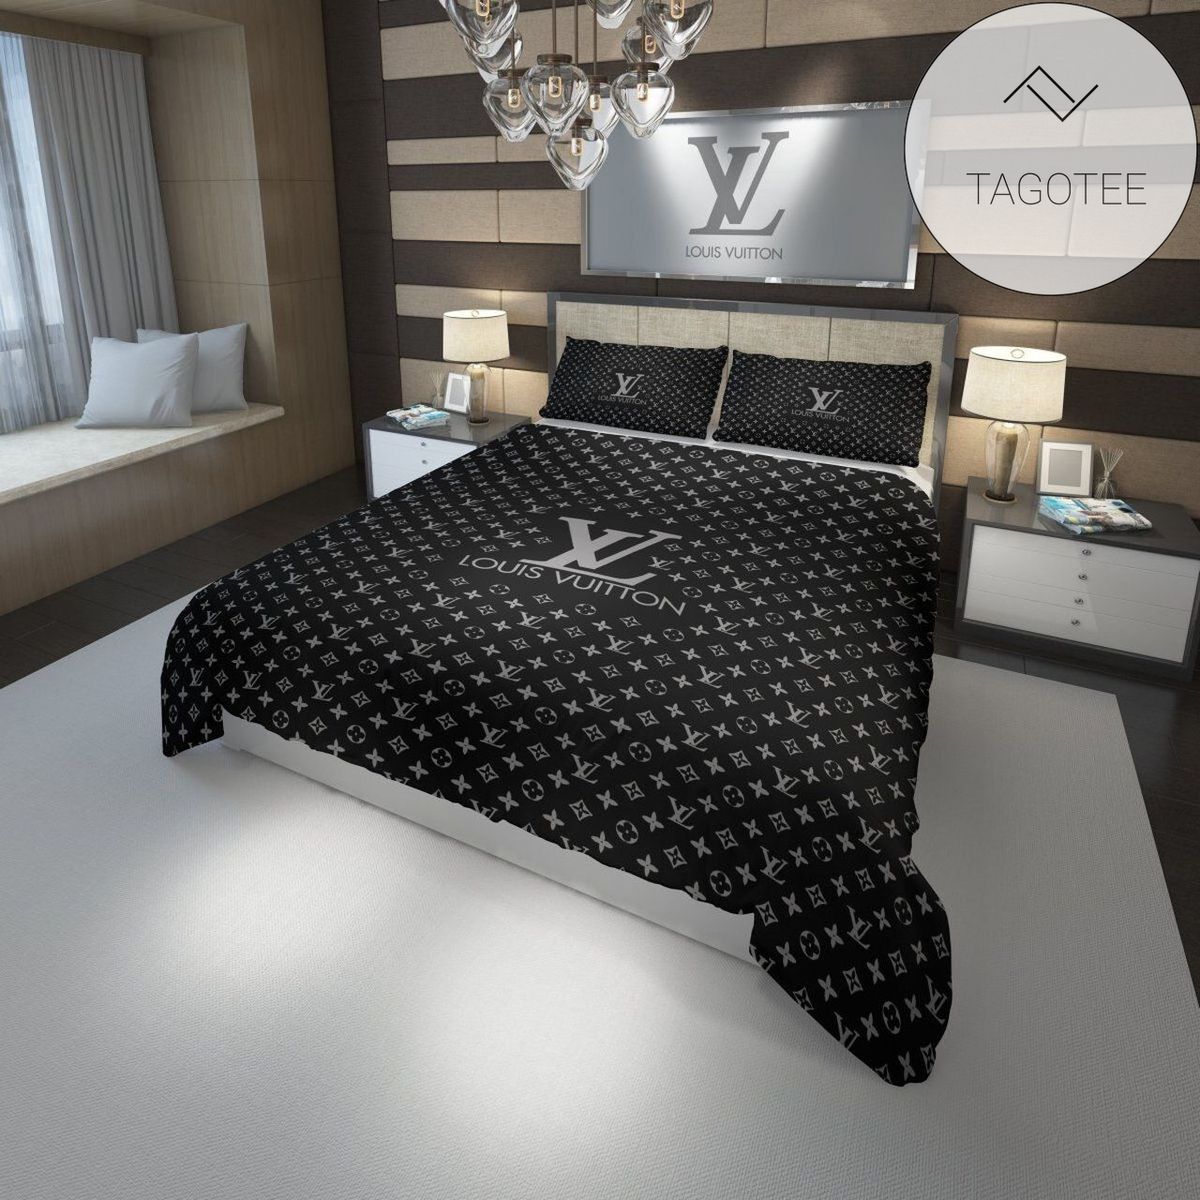 Louis Vuitton 6 3d Personalized Customized Bedding Sets Duvet Cover Bedroom Sets Bedset Bedlinen (Duvet Cover & Pillowcases) 2022